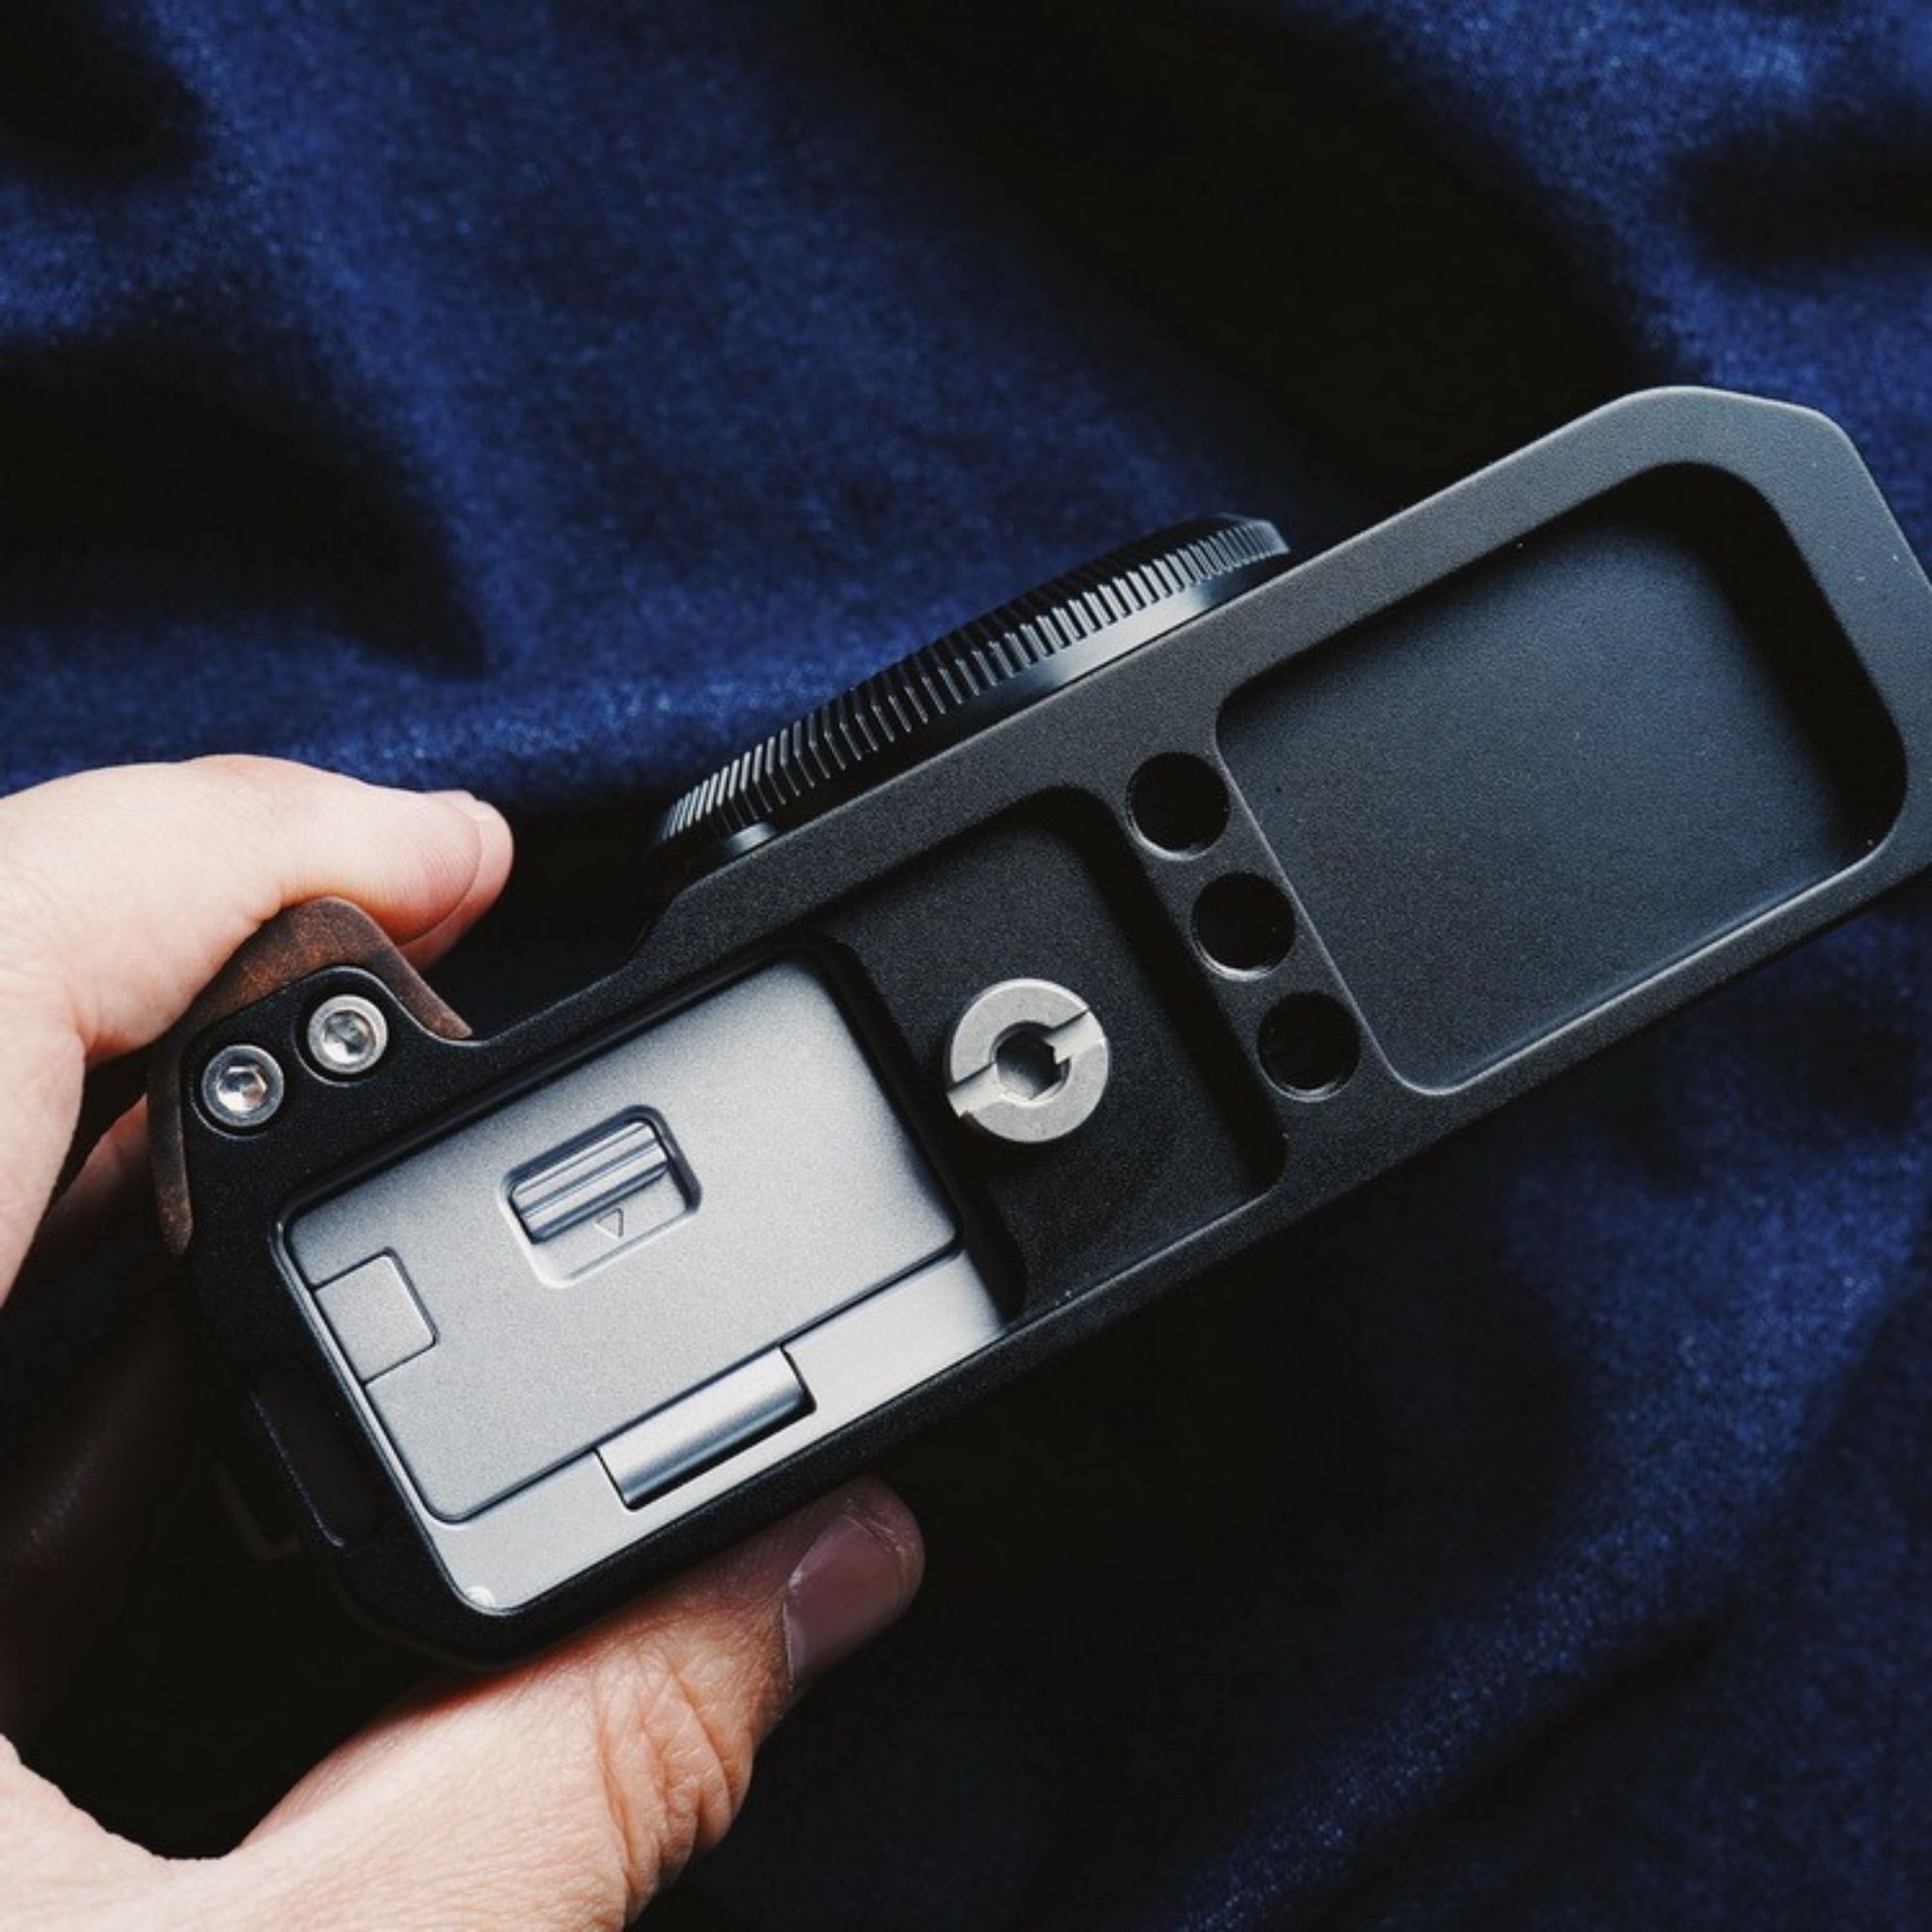 Fuji X-E4 wooden hand grip with tripod mount, camera hand grip, Fujifilm XE4 lightweight handgrip, tripod mount, photographer gift